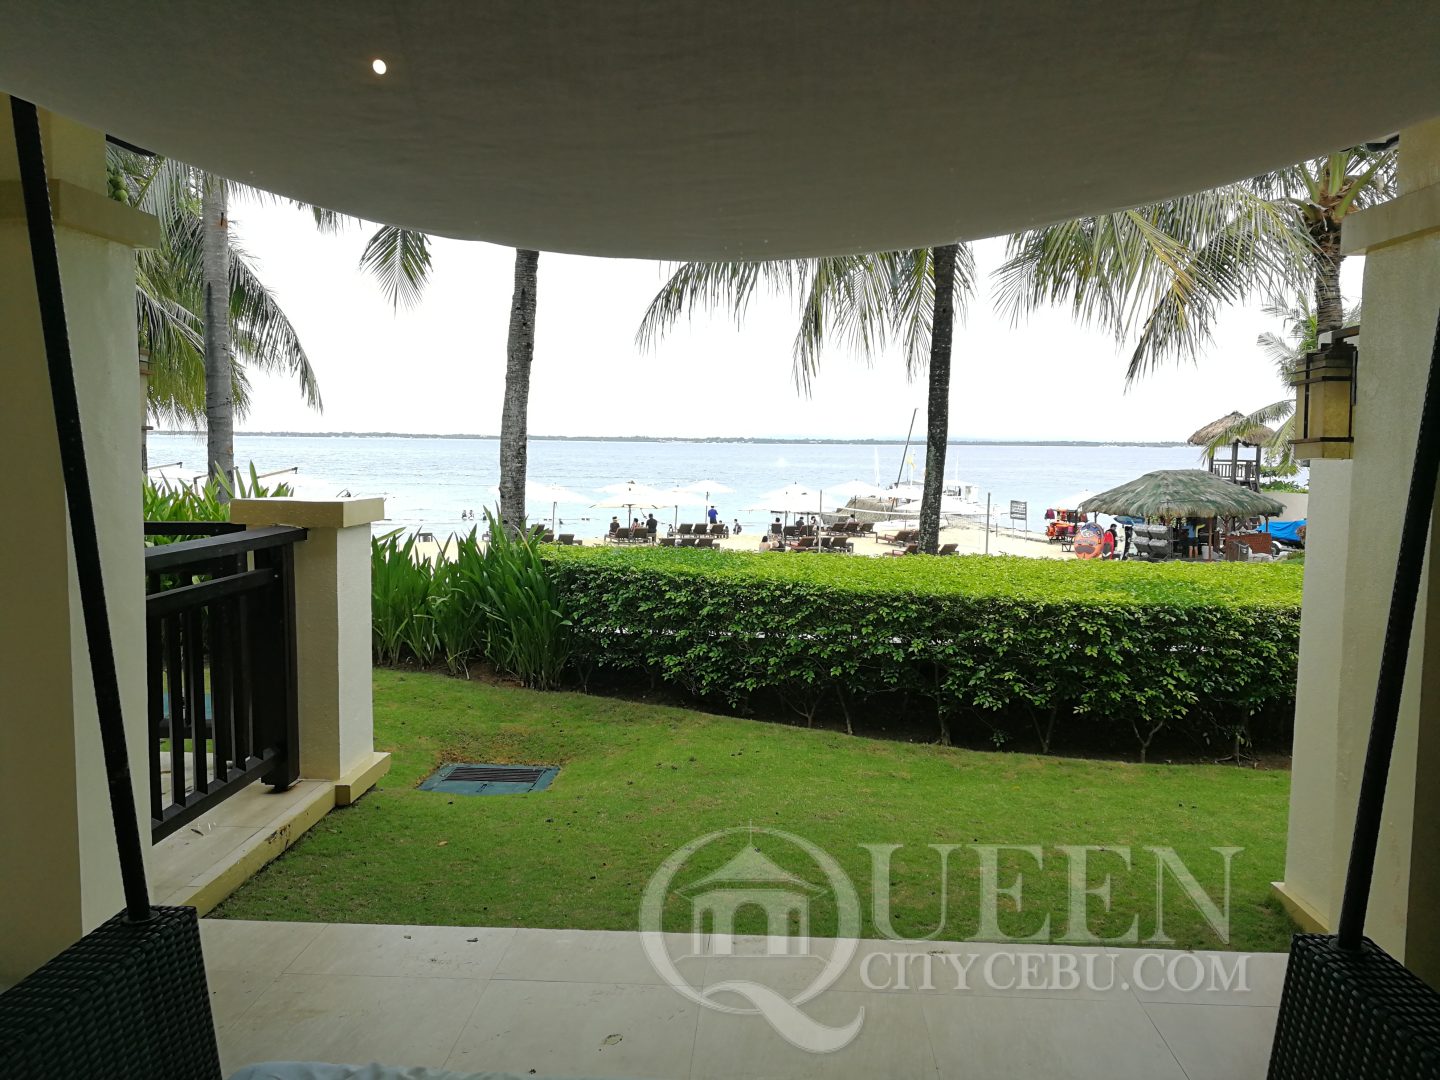 View from the bedroom of Crimson Resort's Beach Casita Villa